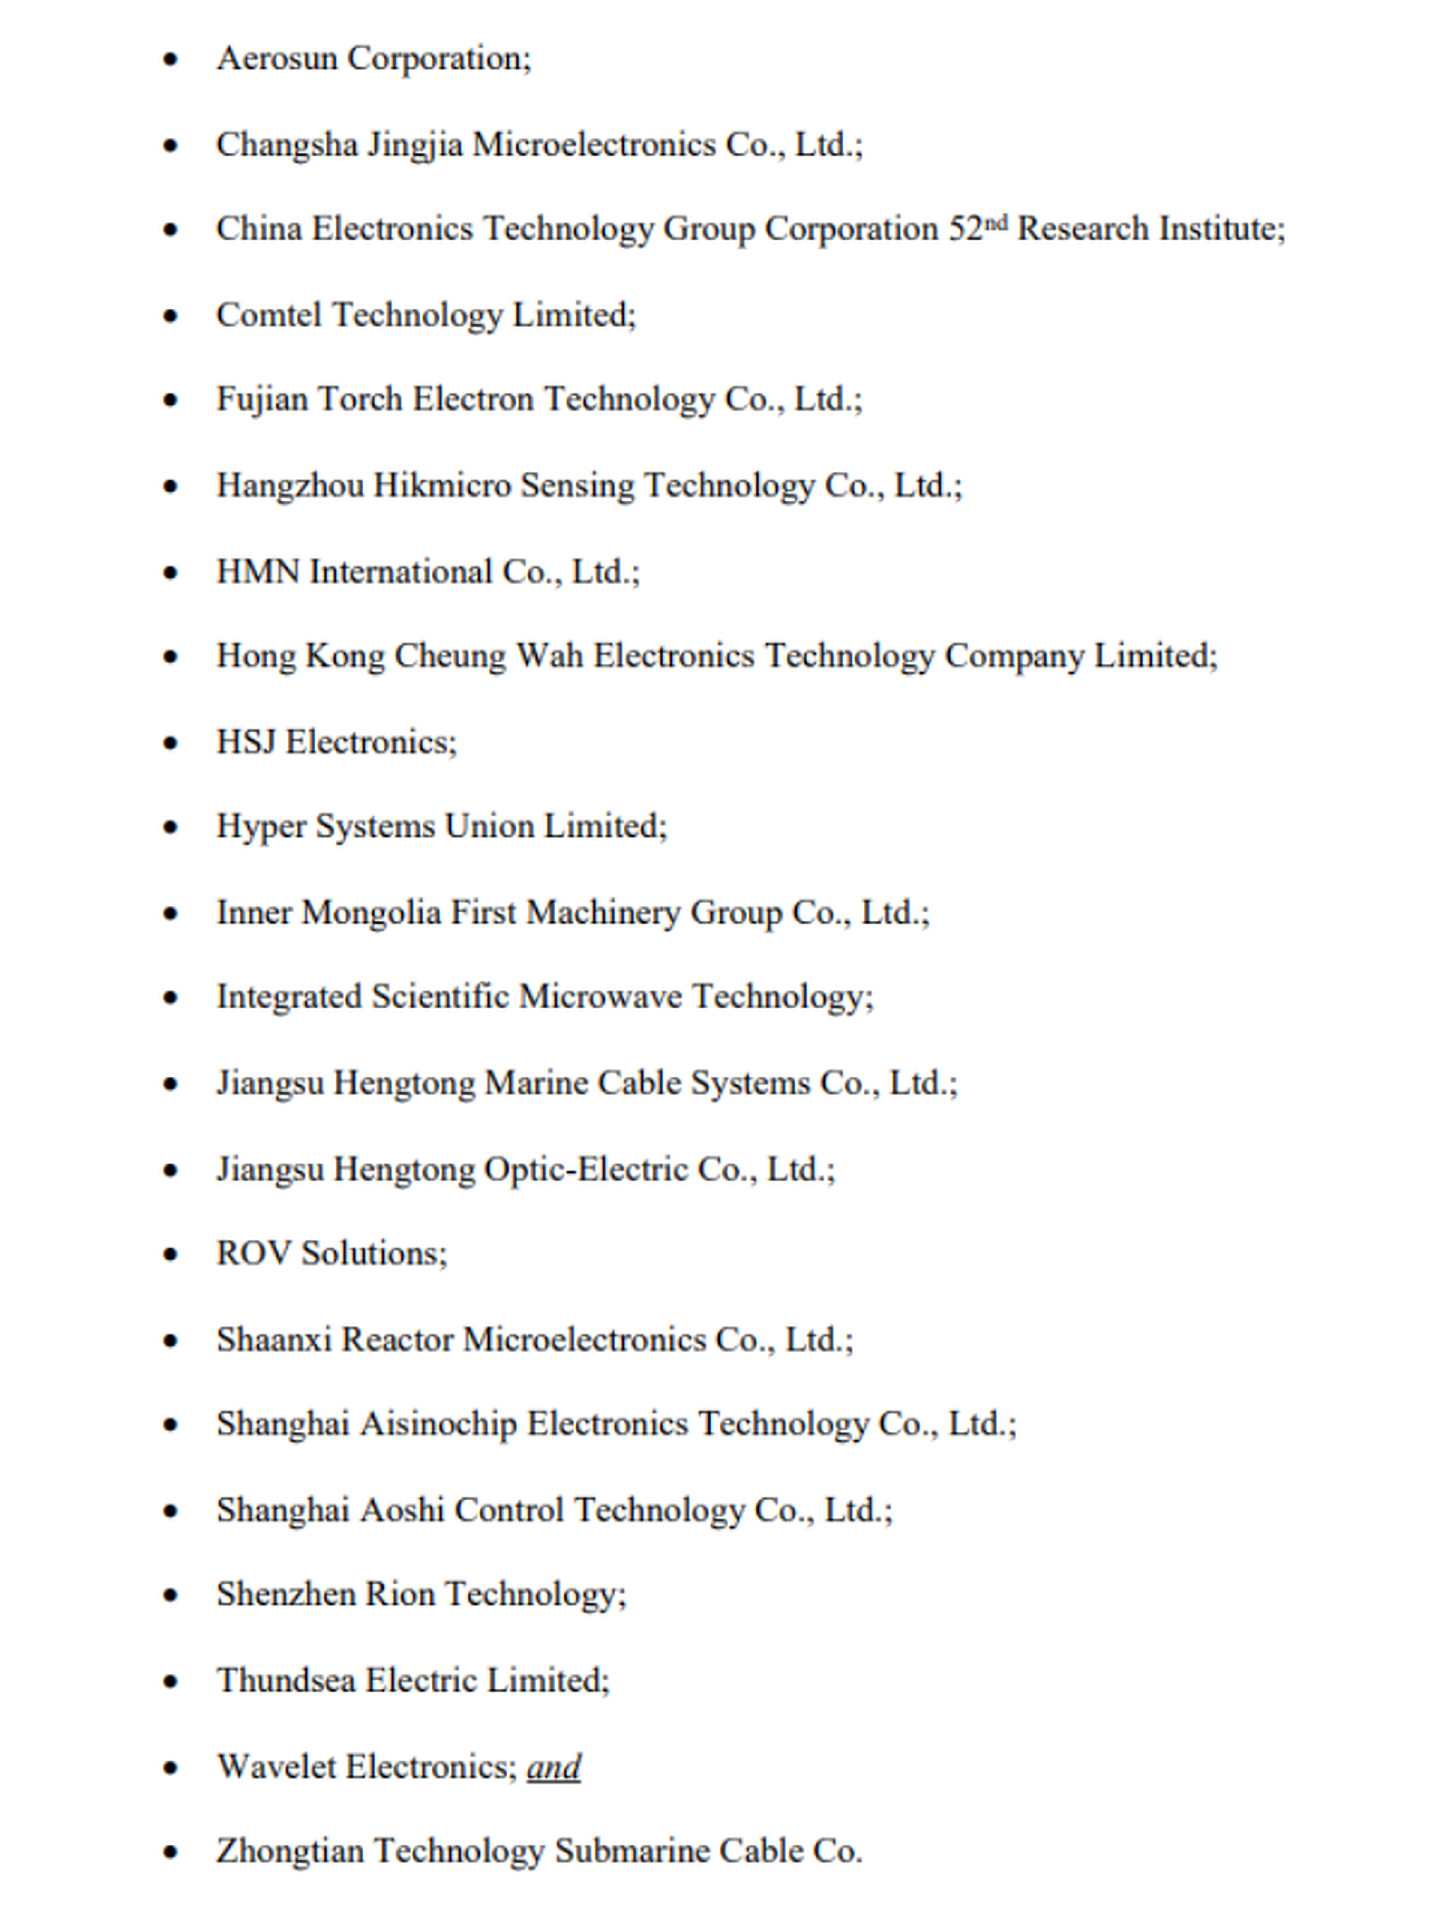 12月16日被美国列入“实体清单”的34间中国企业及组织。（FederalRegister.gov）